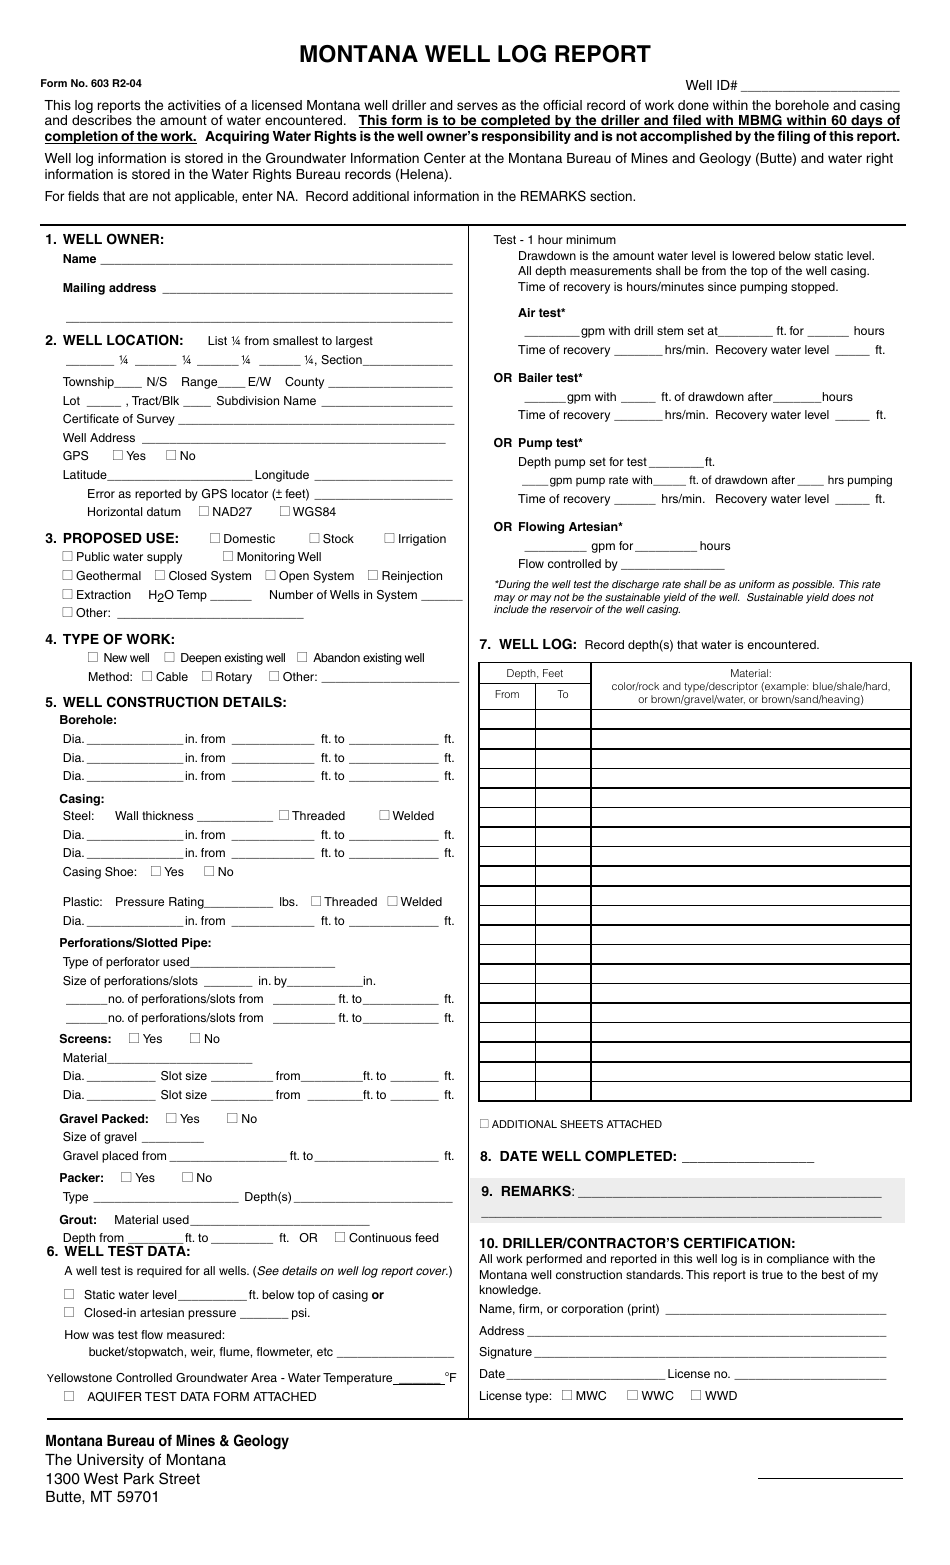 Form 603 Montana Well Log Report - Montana, Page 1